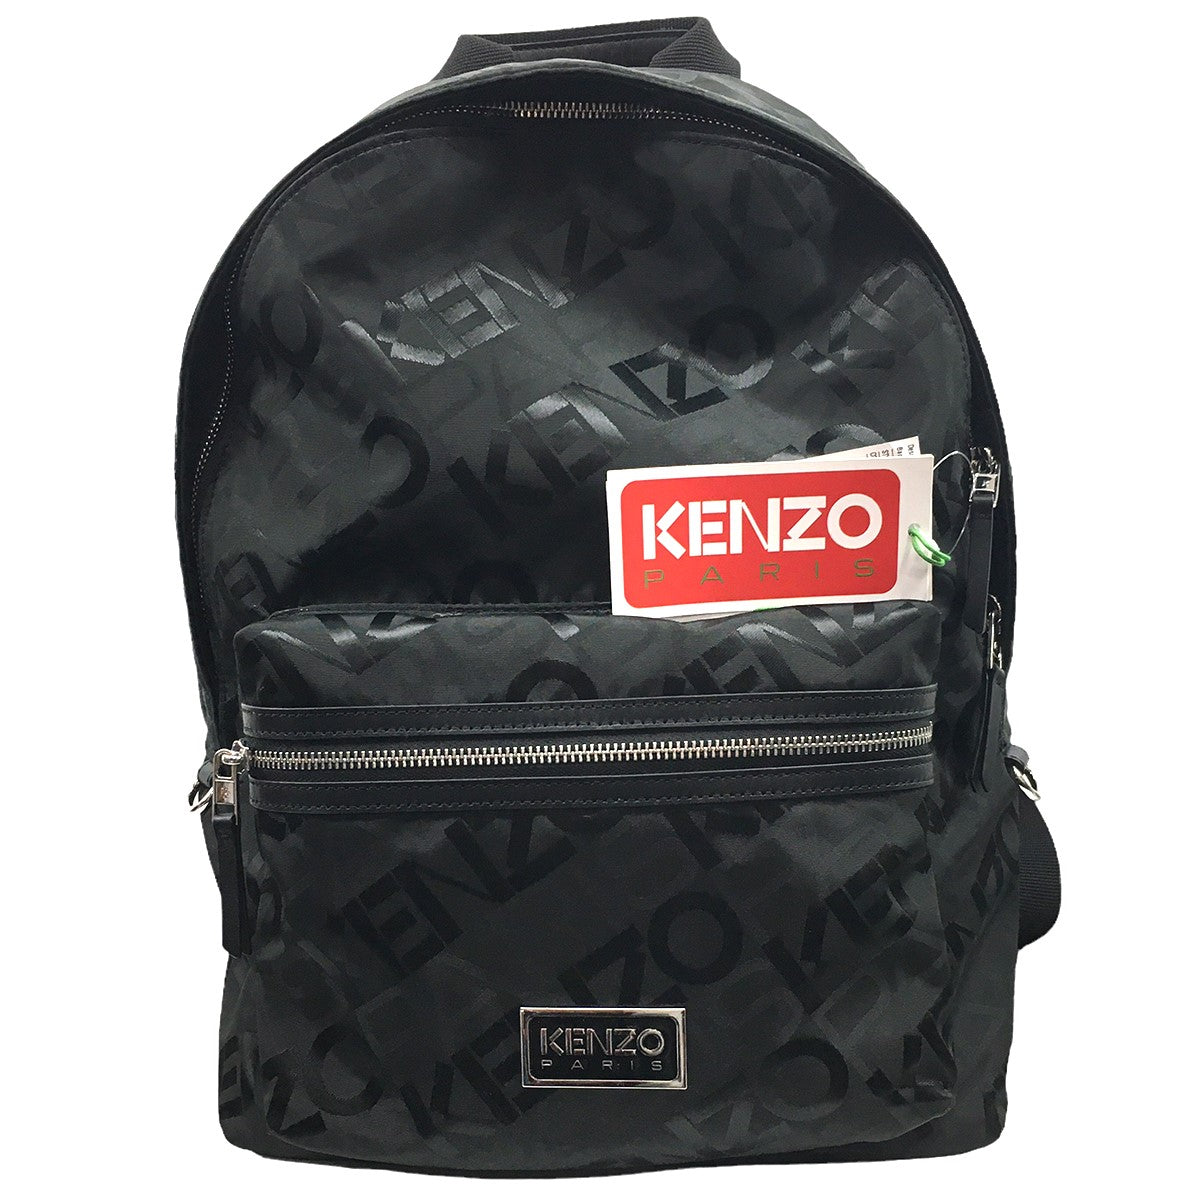 KENZO by NIGO(ケンゾー バイ ニゴ) 24SS BACKPACK ロゴ バックパック 